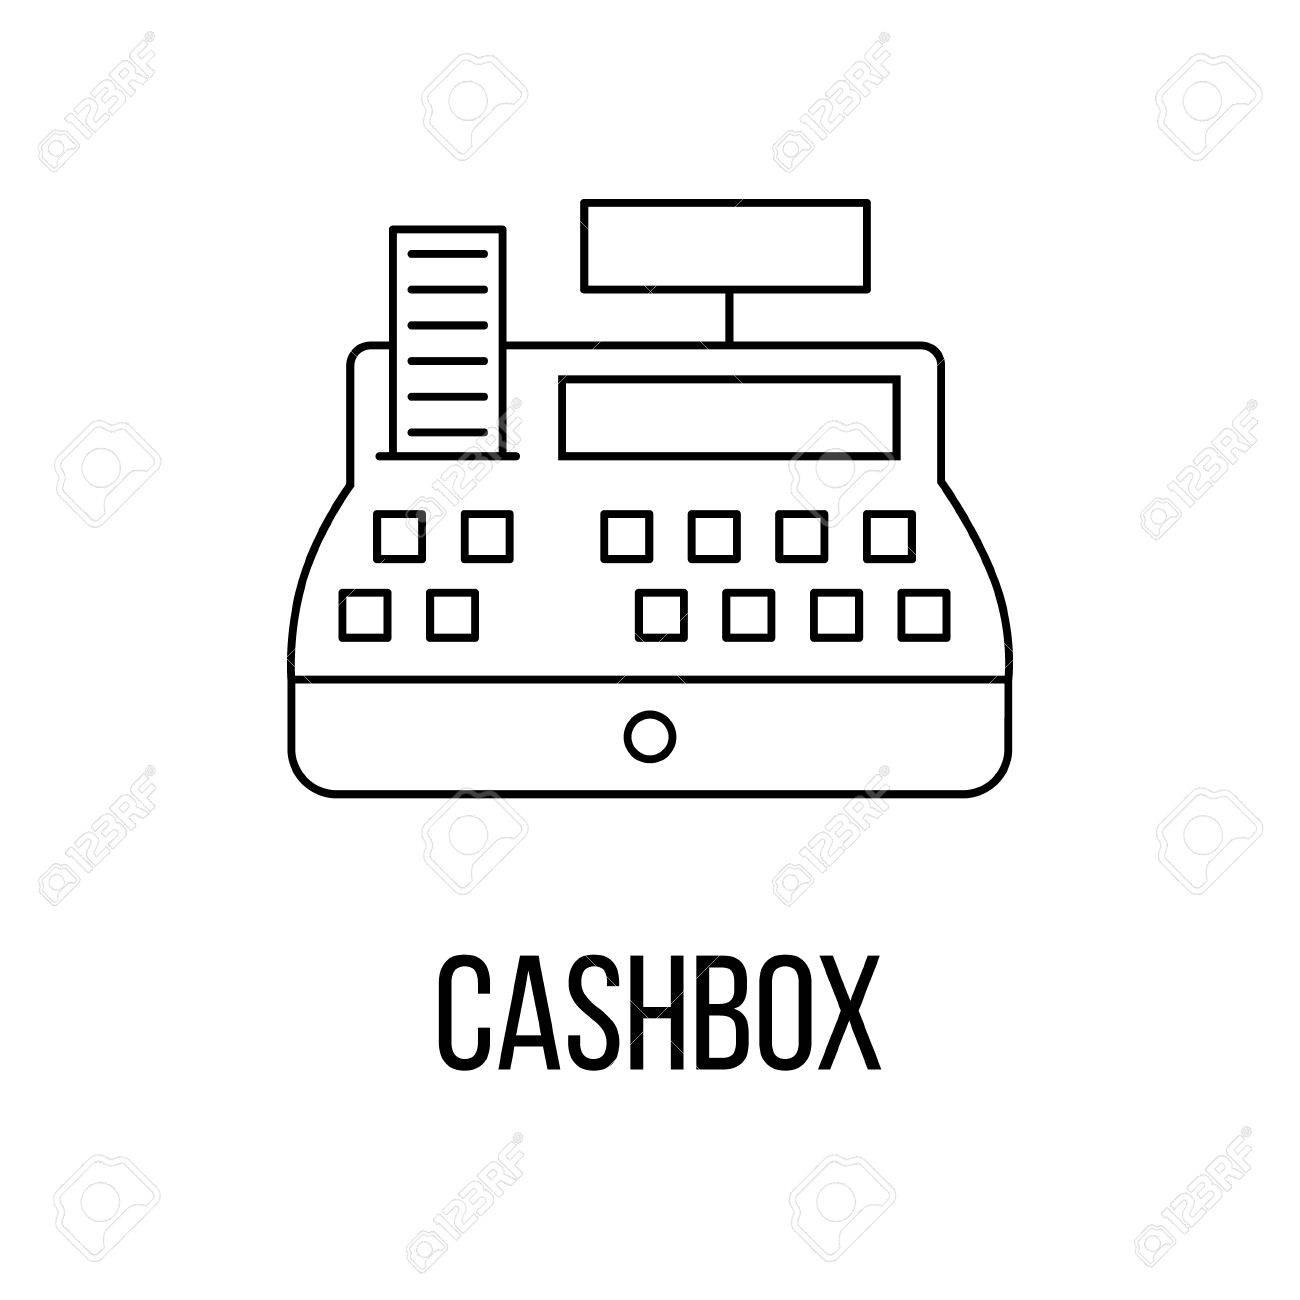 Compact cashbox logo